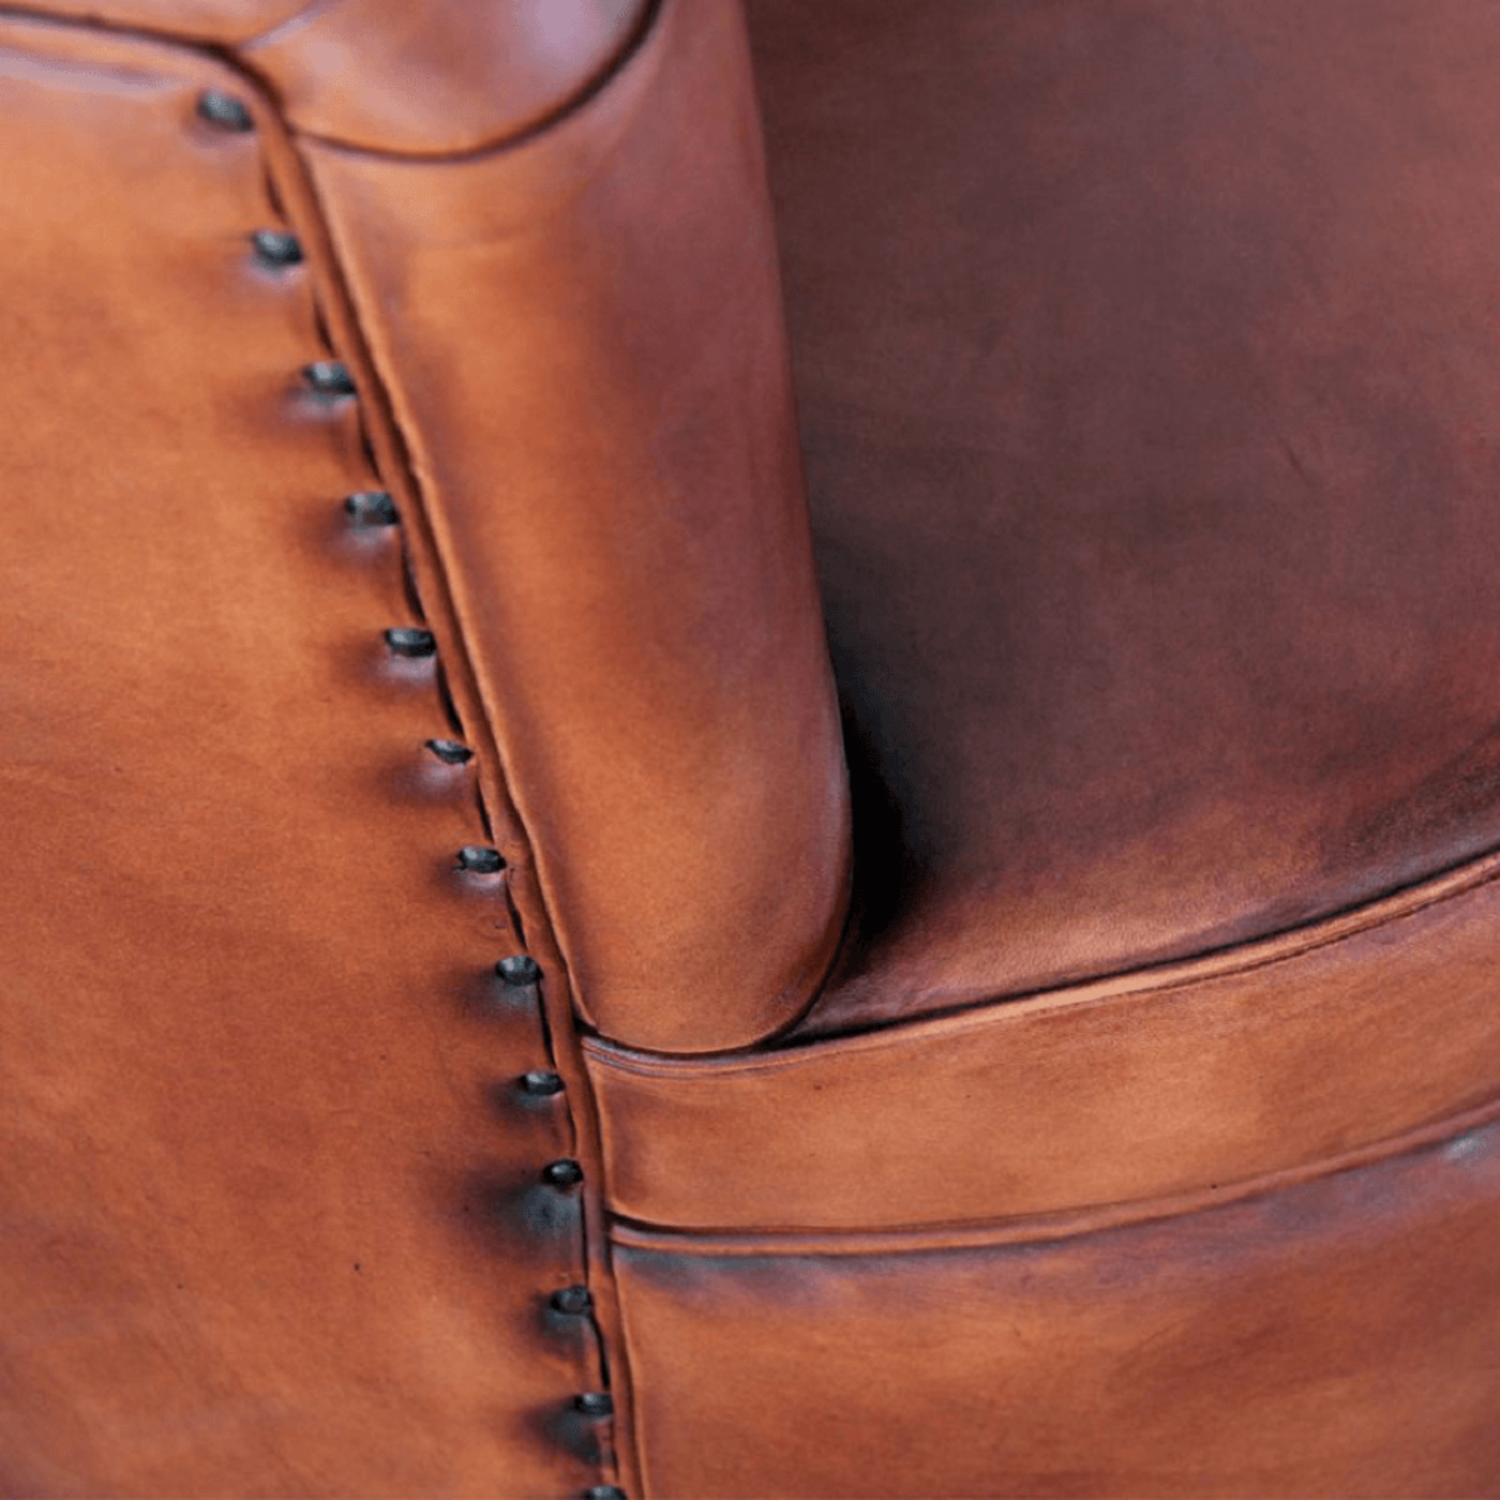 antique leather armchair